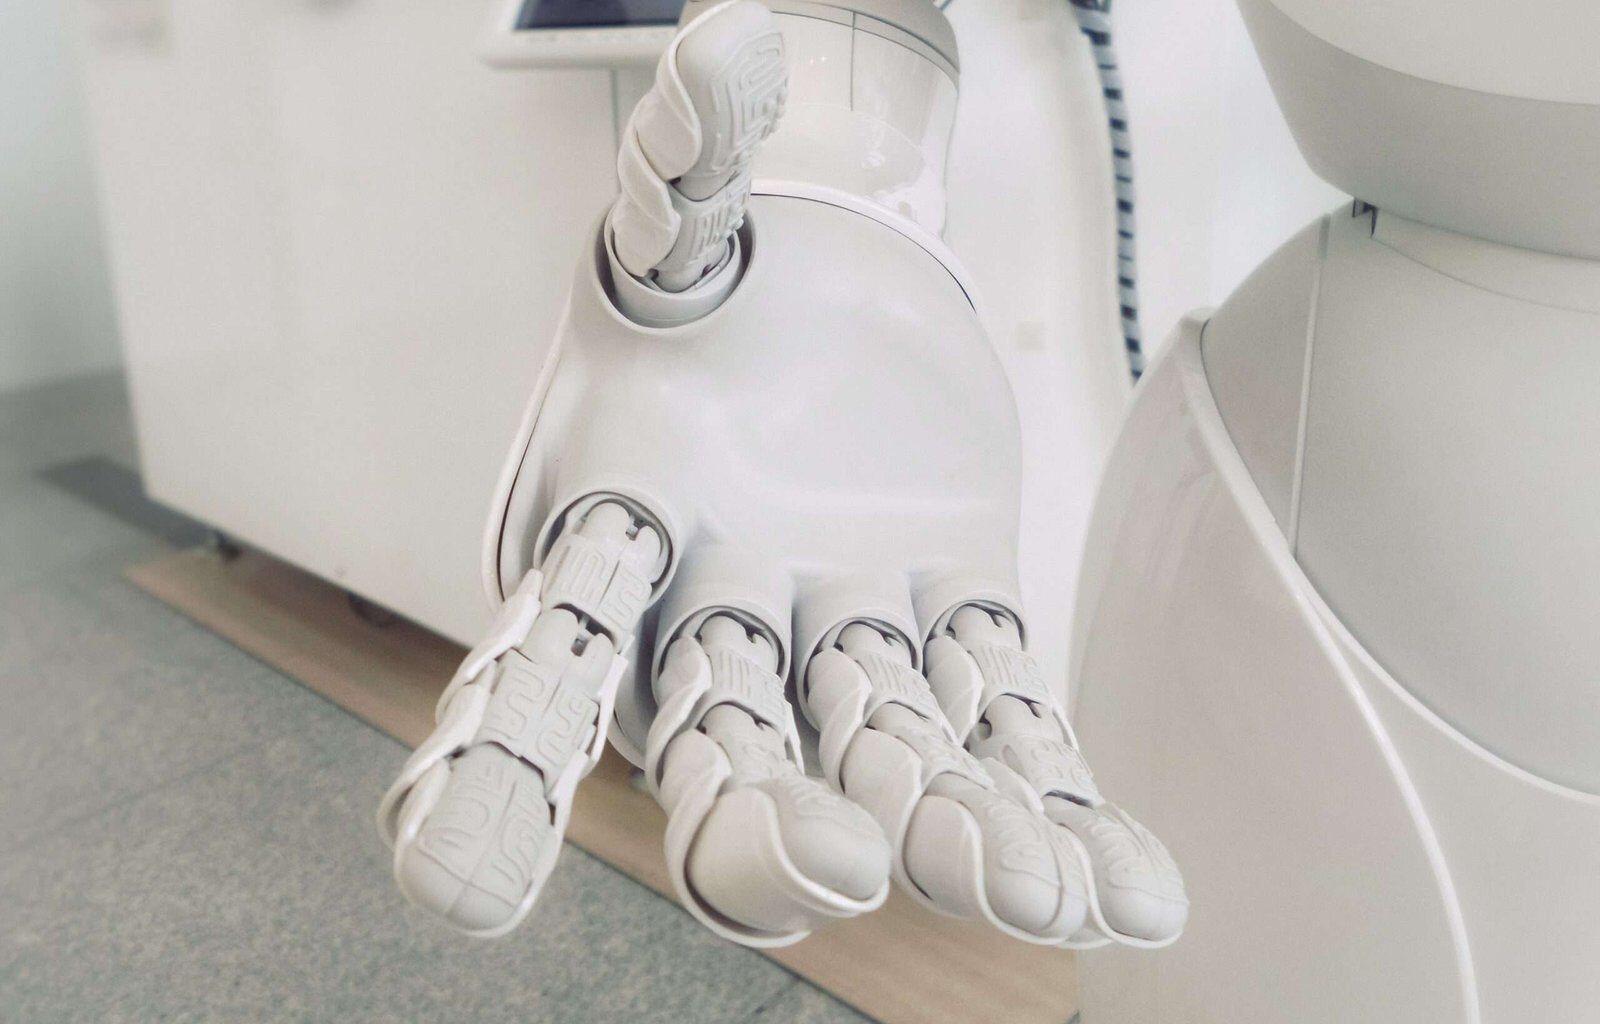 Robot/Automation